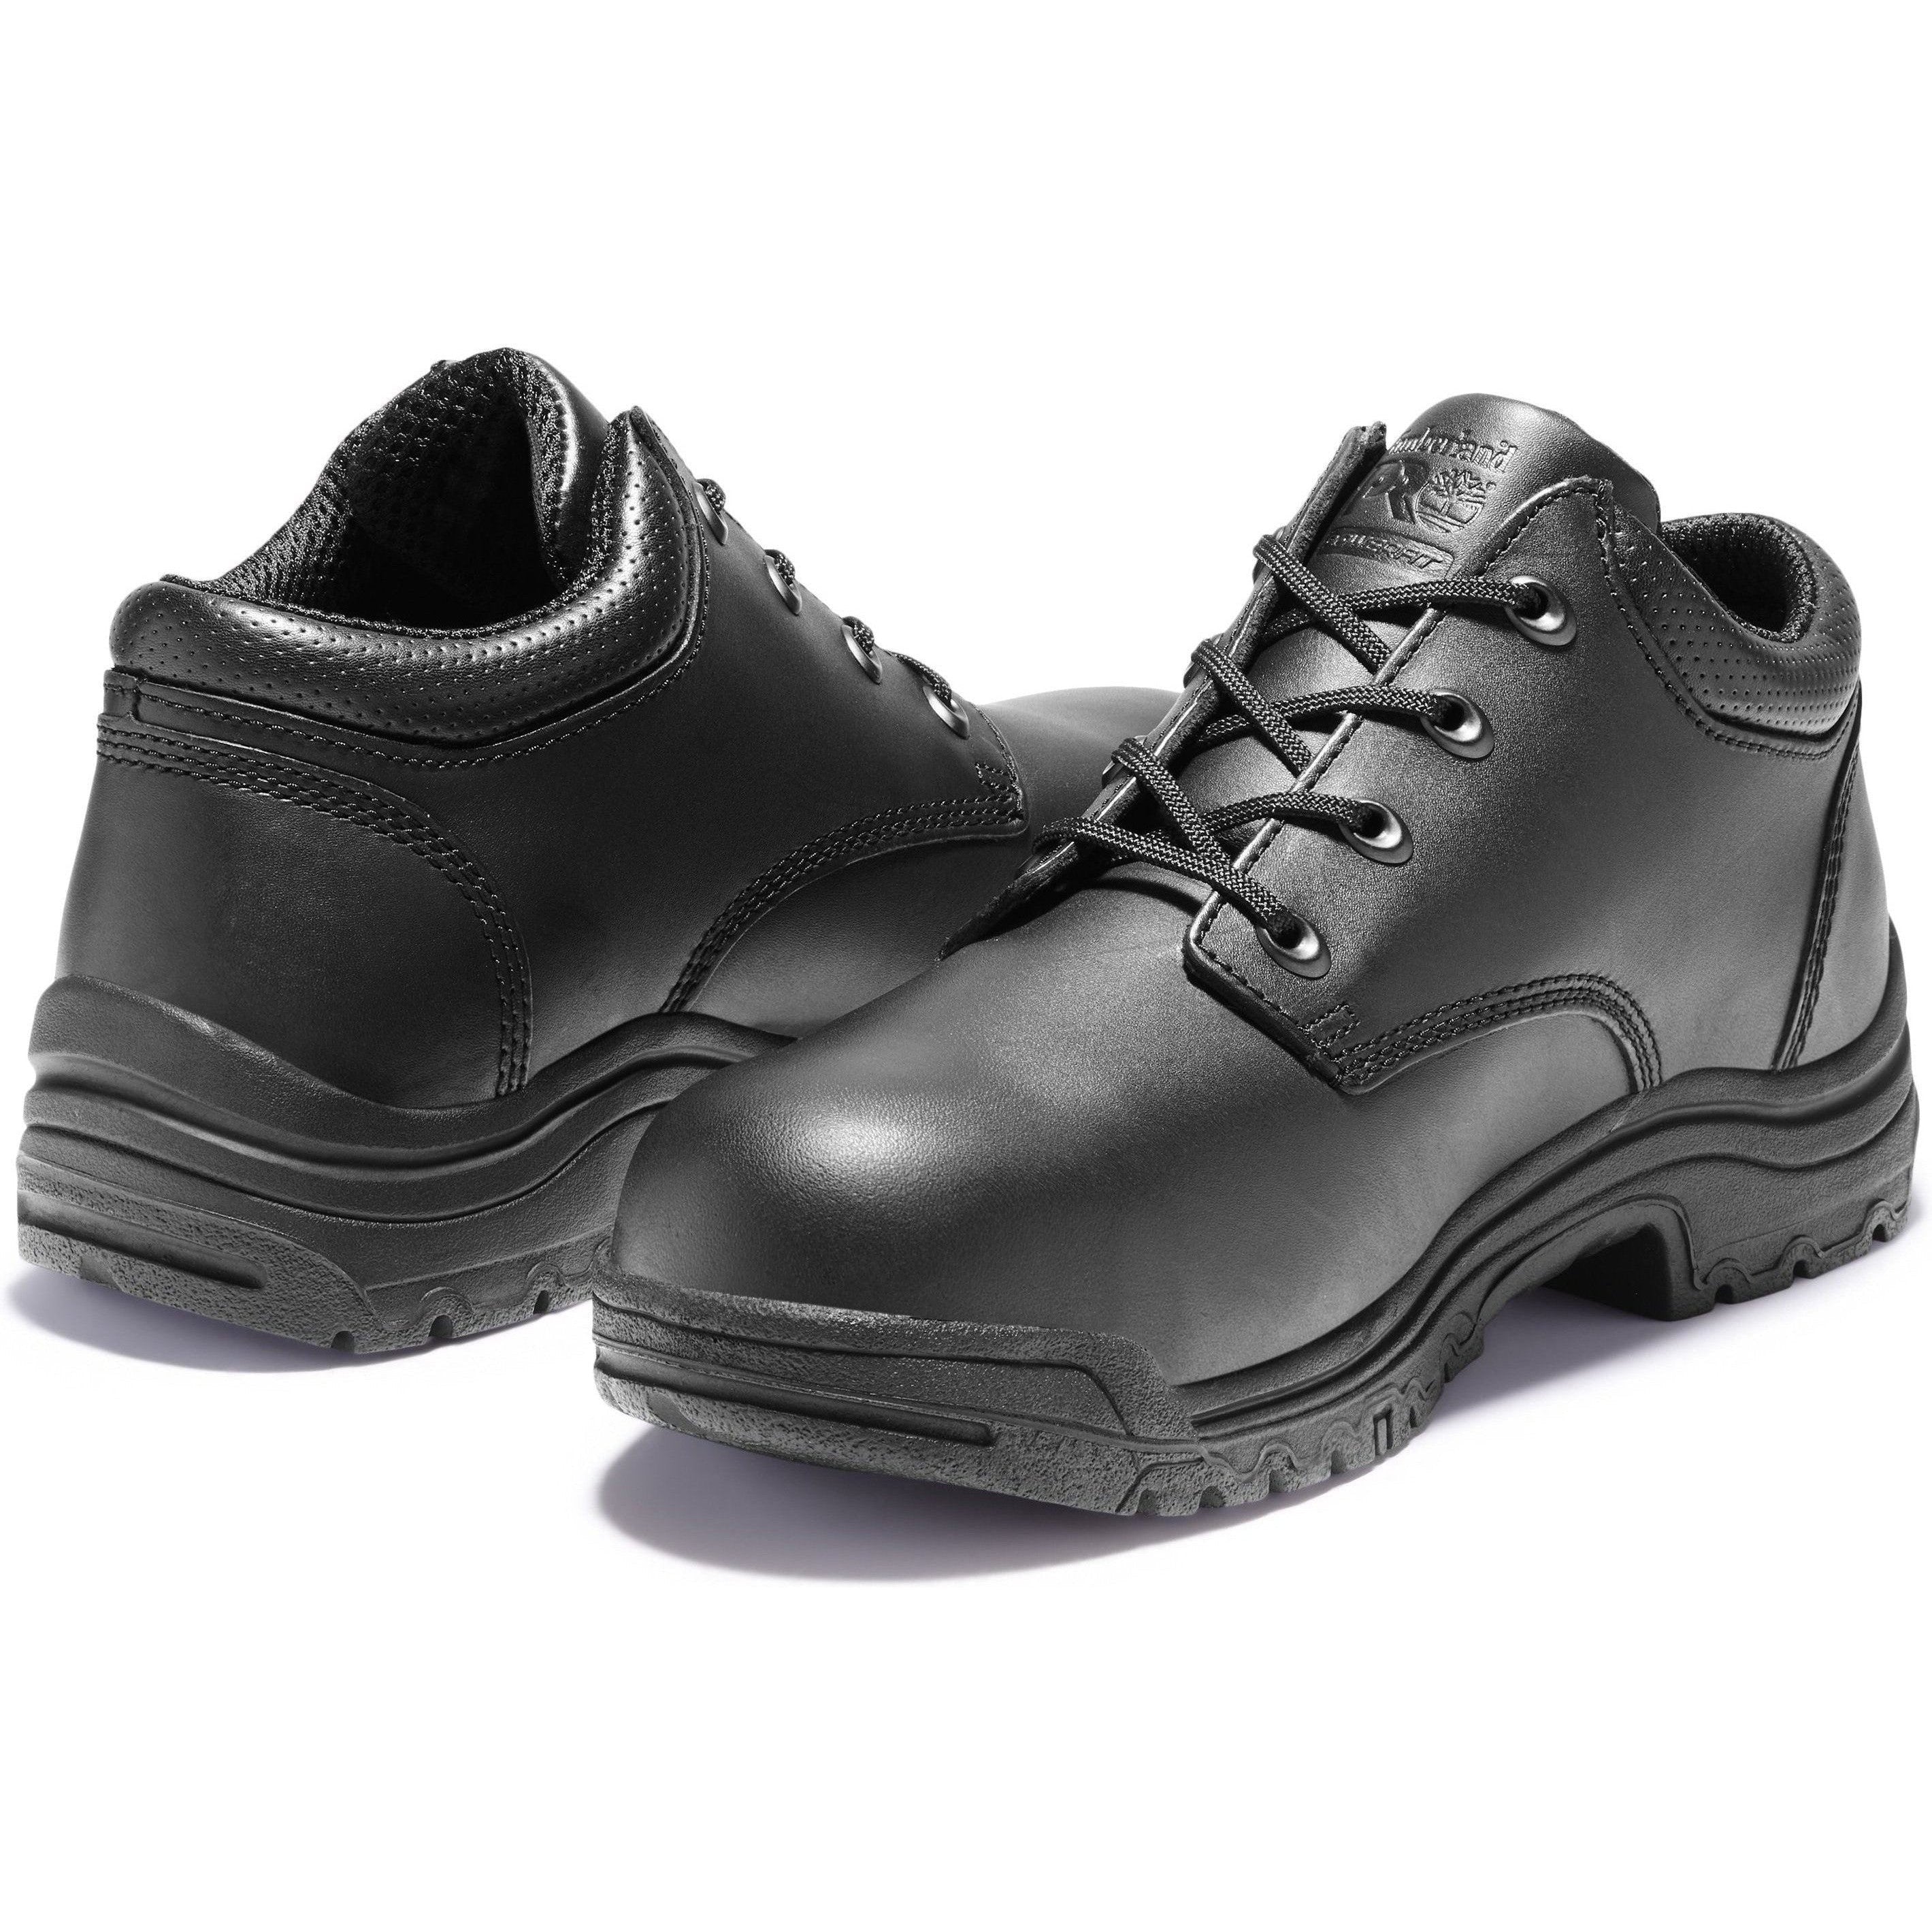 Timberland PRO Men's TiTAN Oxford Alloy Toe Work Shoe Black TB140044001  - Overlook Boots